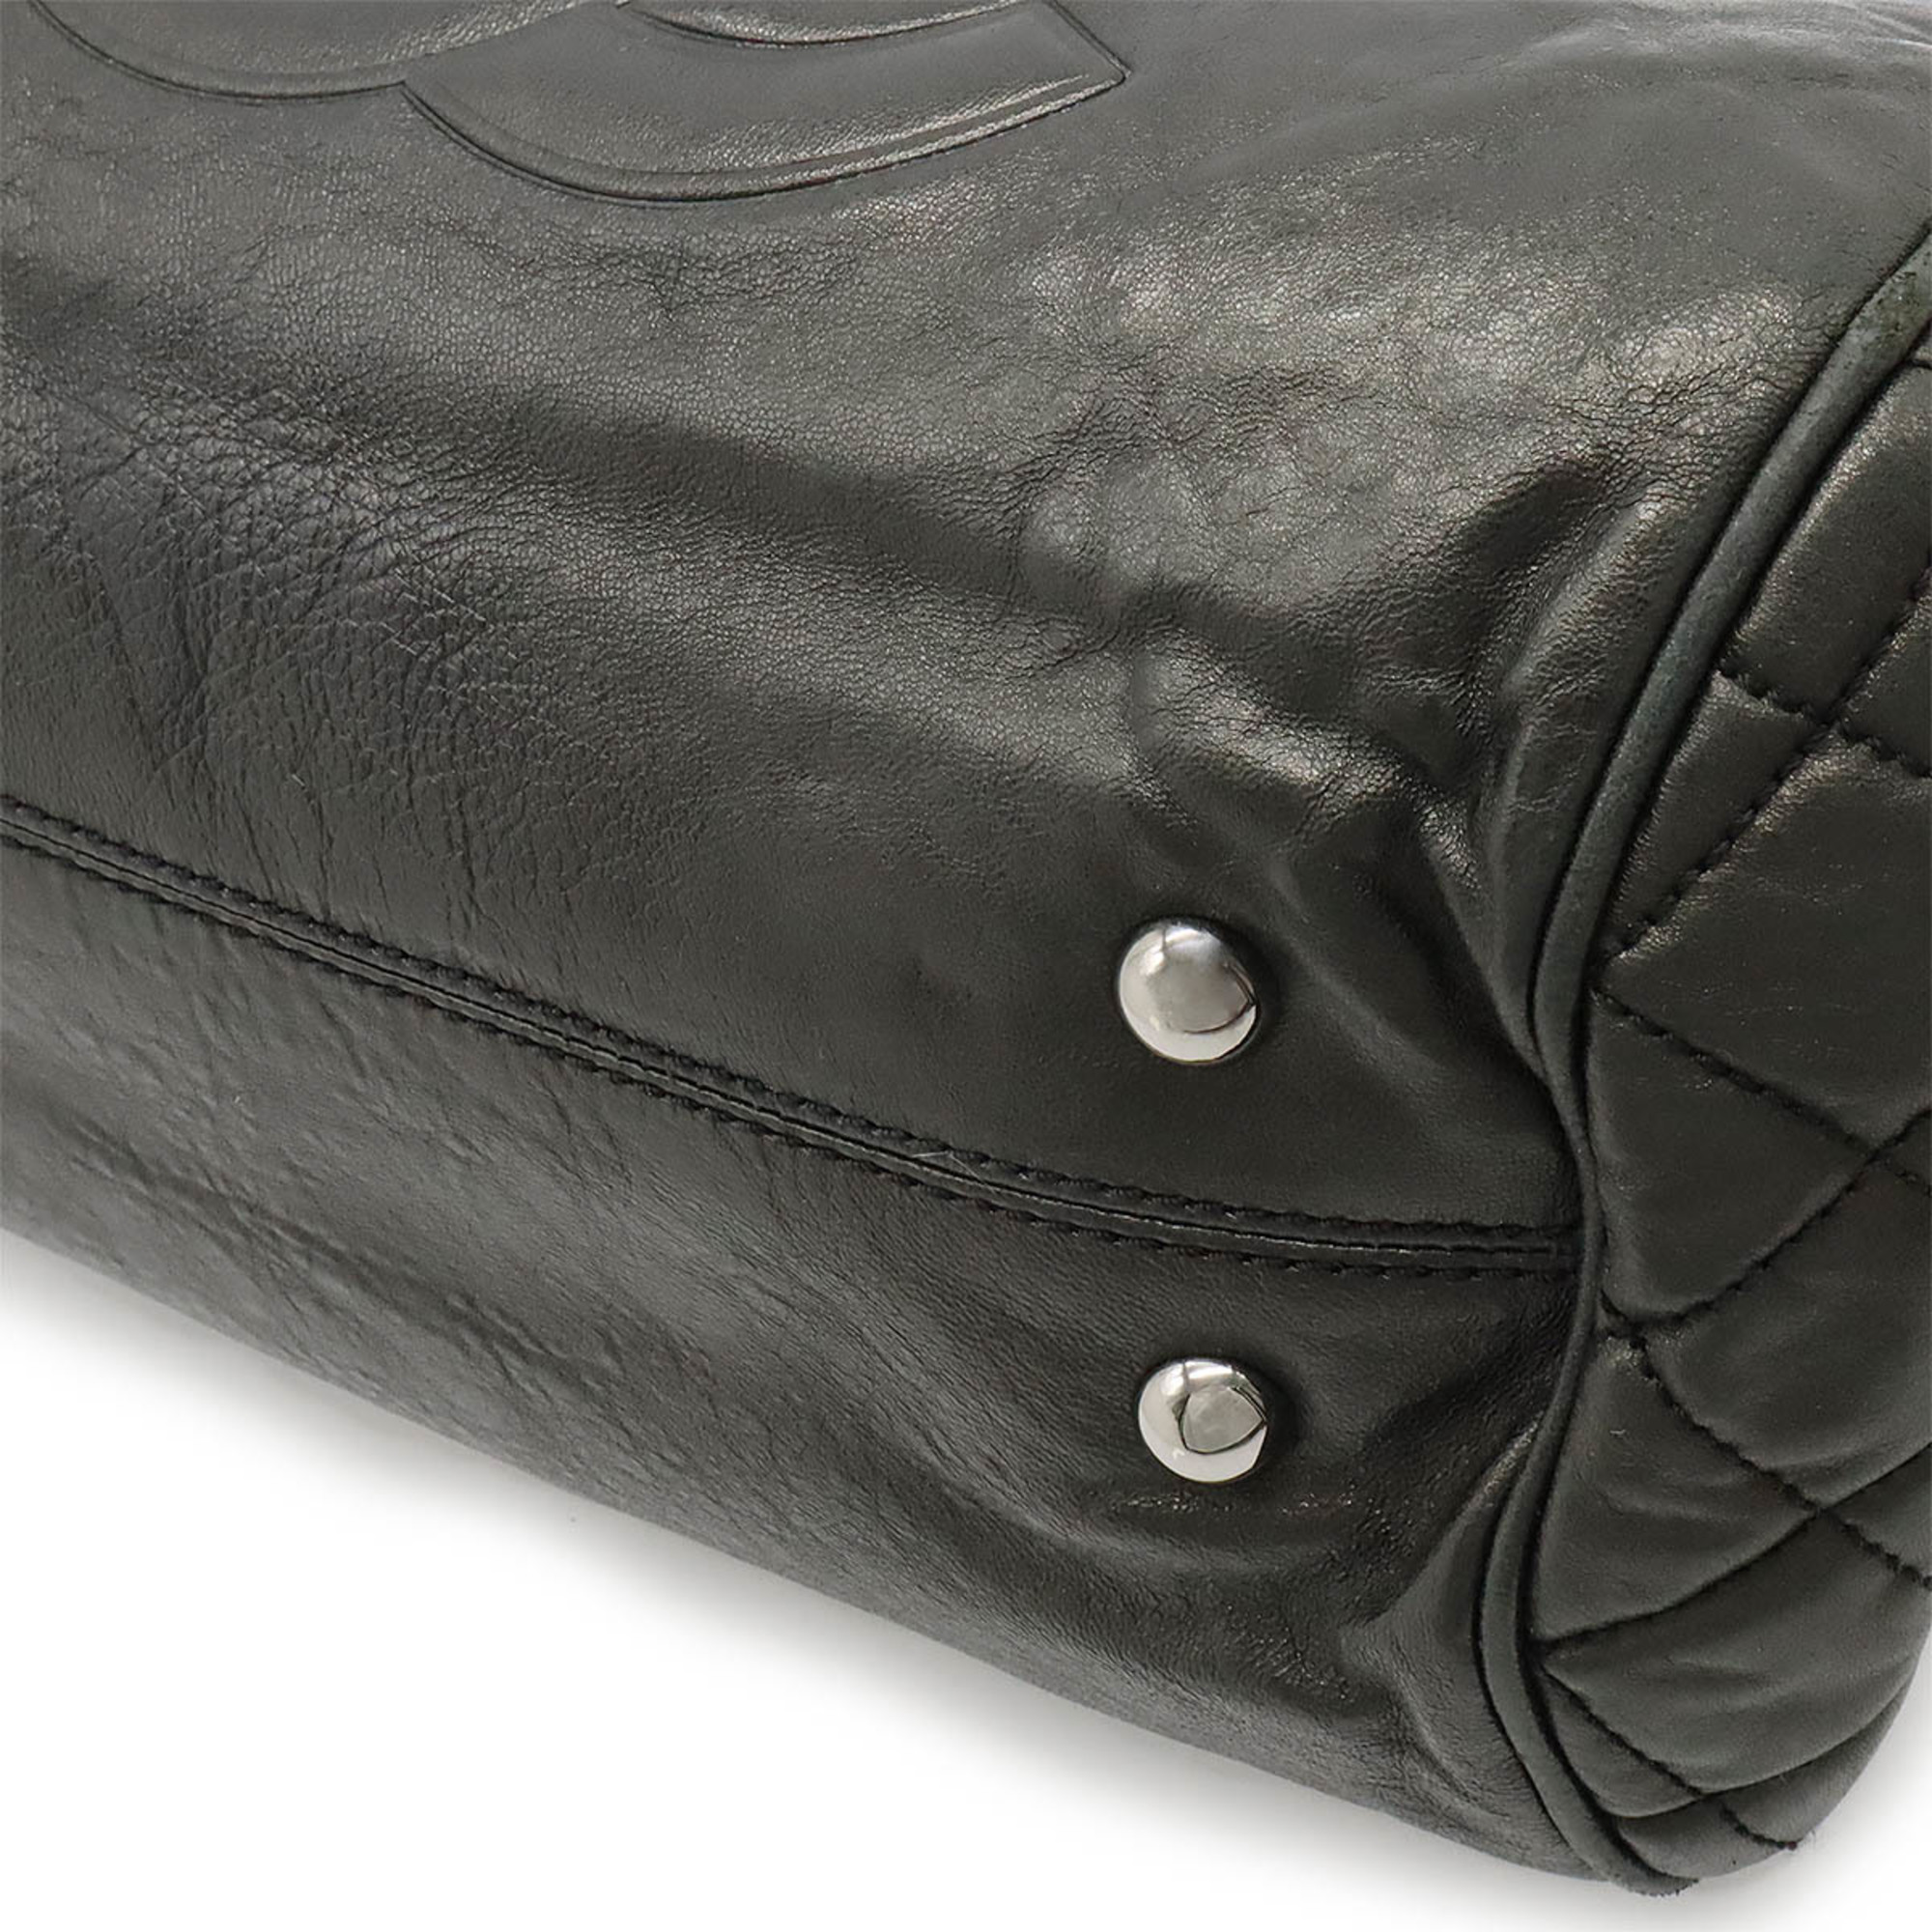 CHANEL Coco Mark Chain Shoulder Tote Bag Leather Black